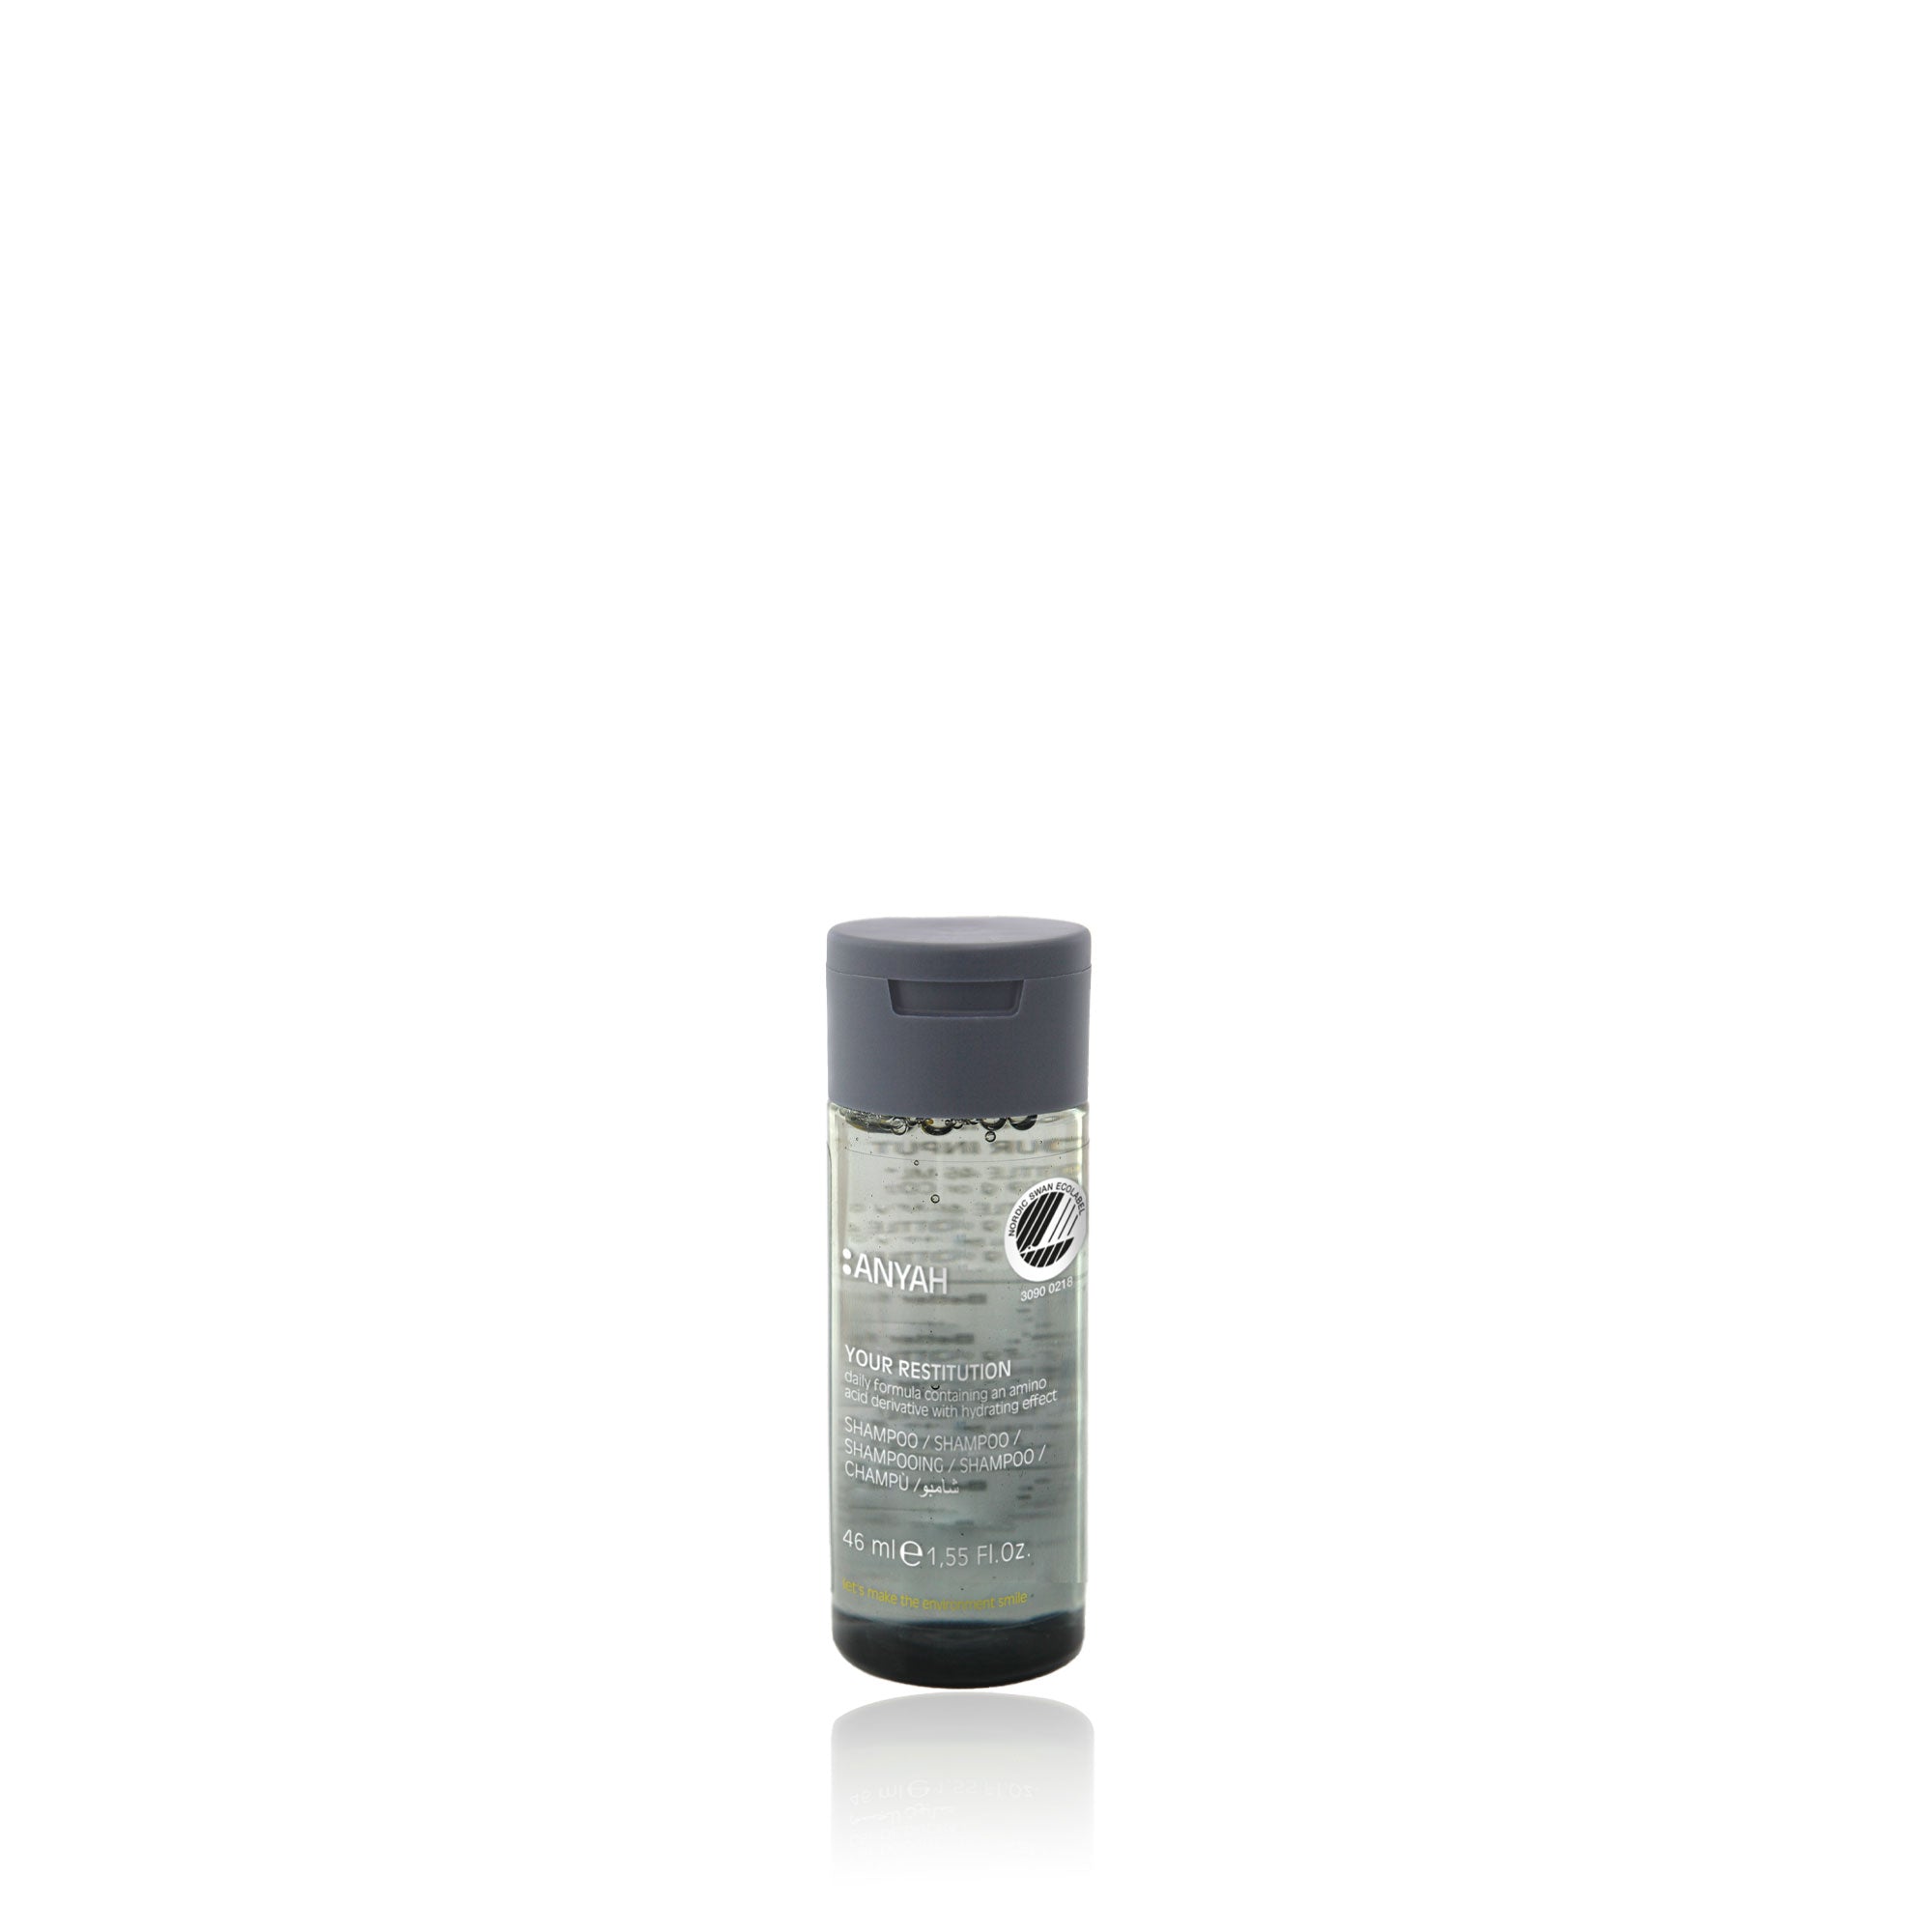 Anyah Shampoo - Nordic Ecolabel Certified (46 ml)